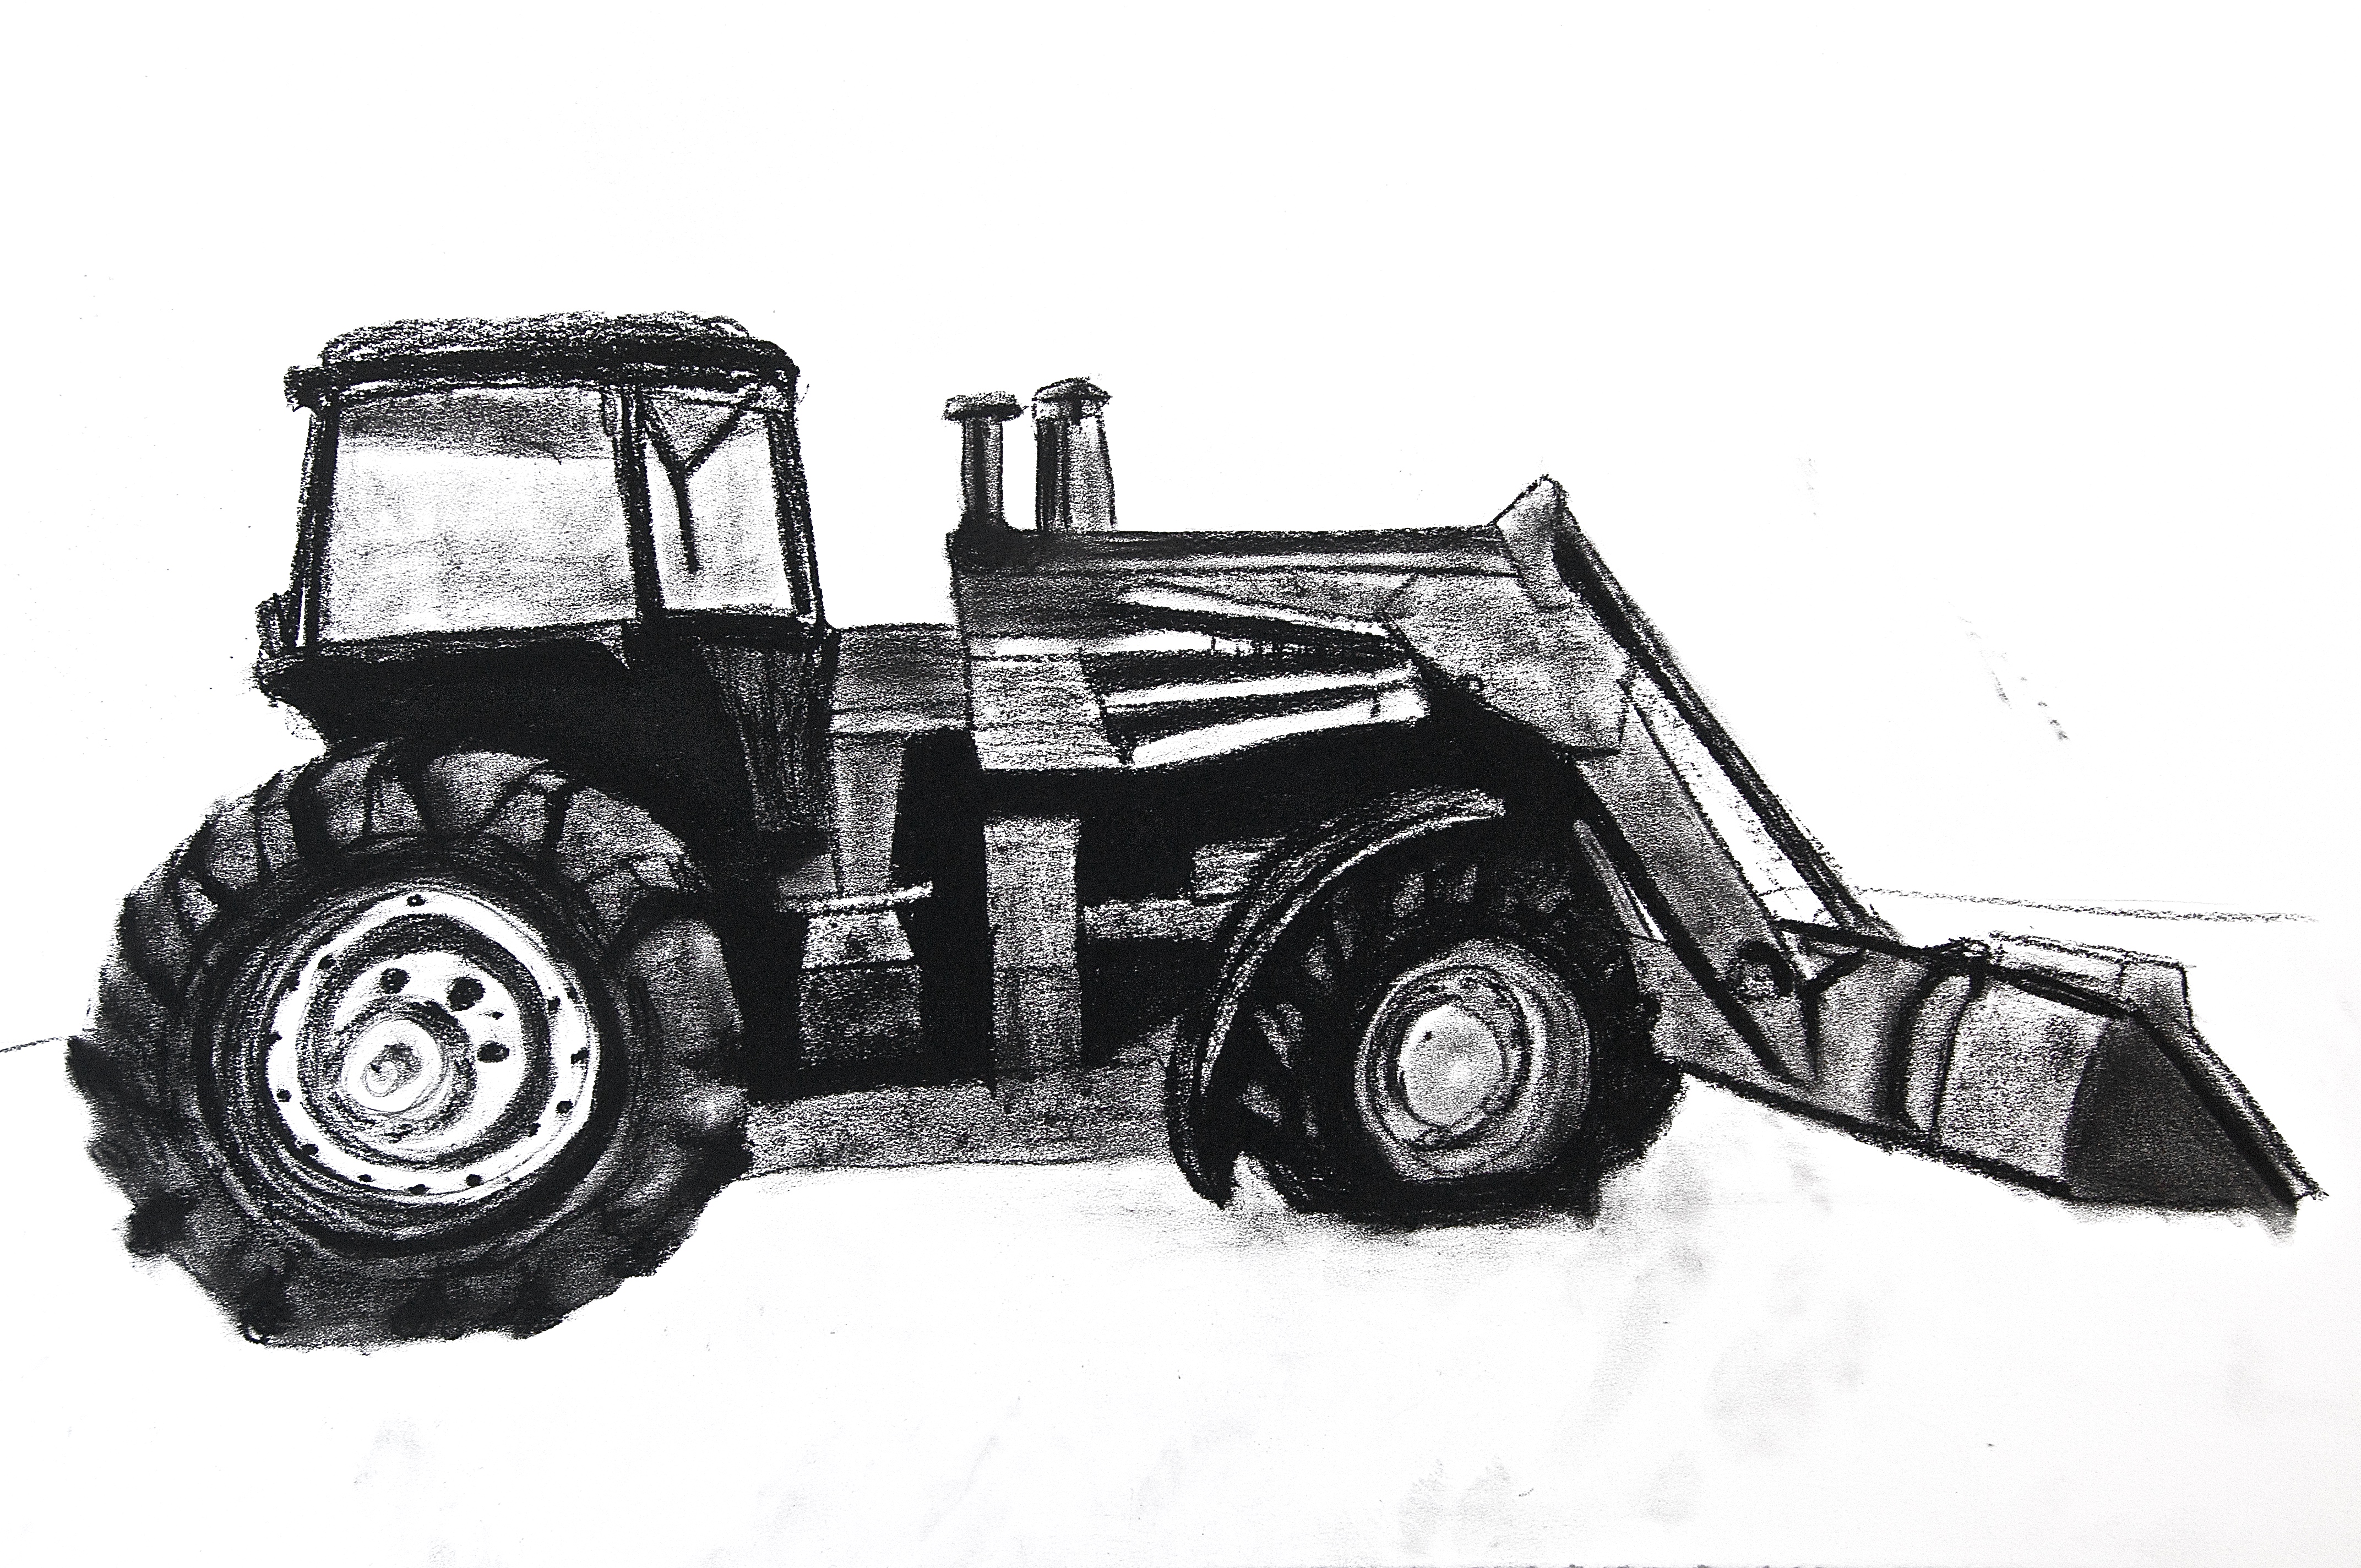 Bulldozer Sketch at Explore collection of